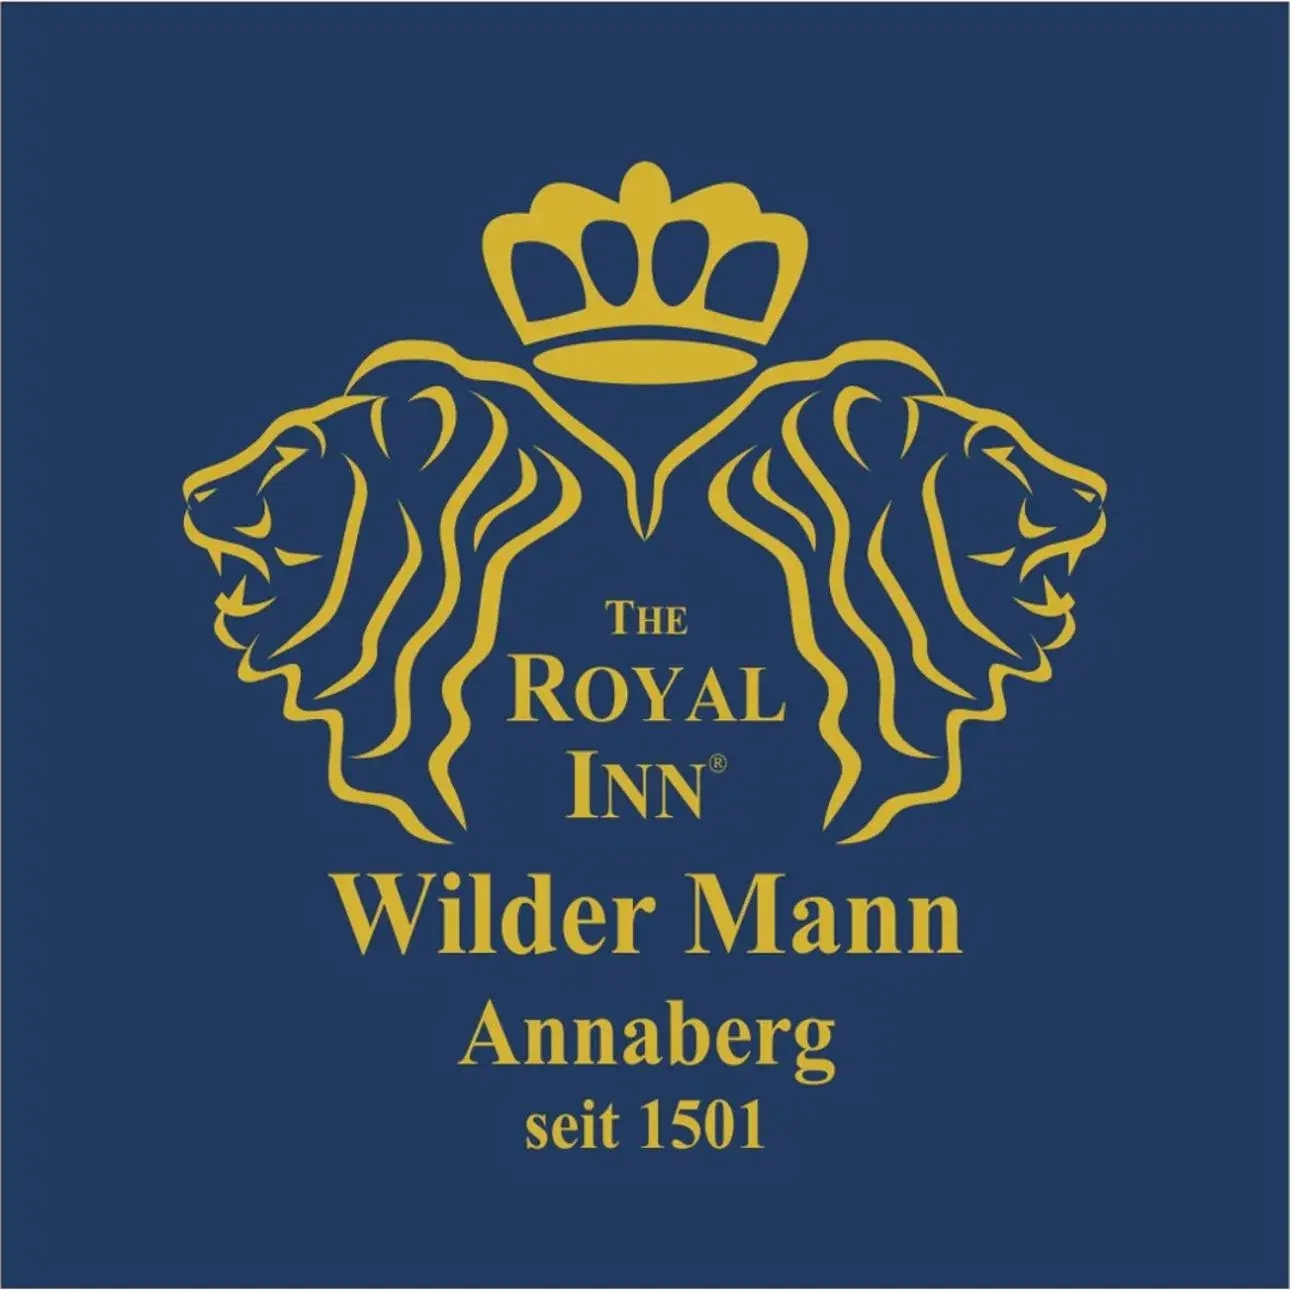 Spring in The Royal Inn Wilder Mann Annaberg